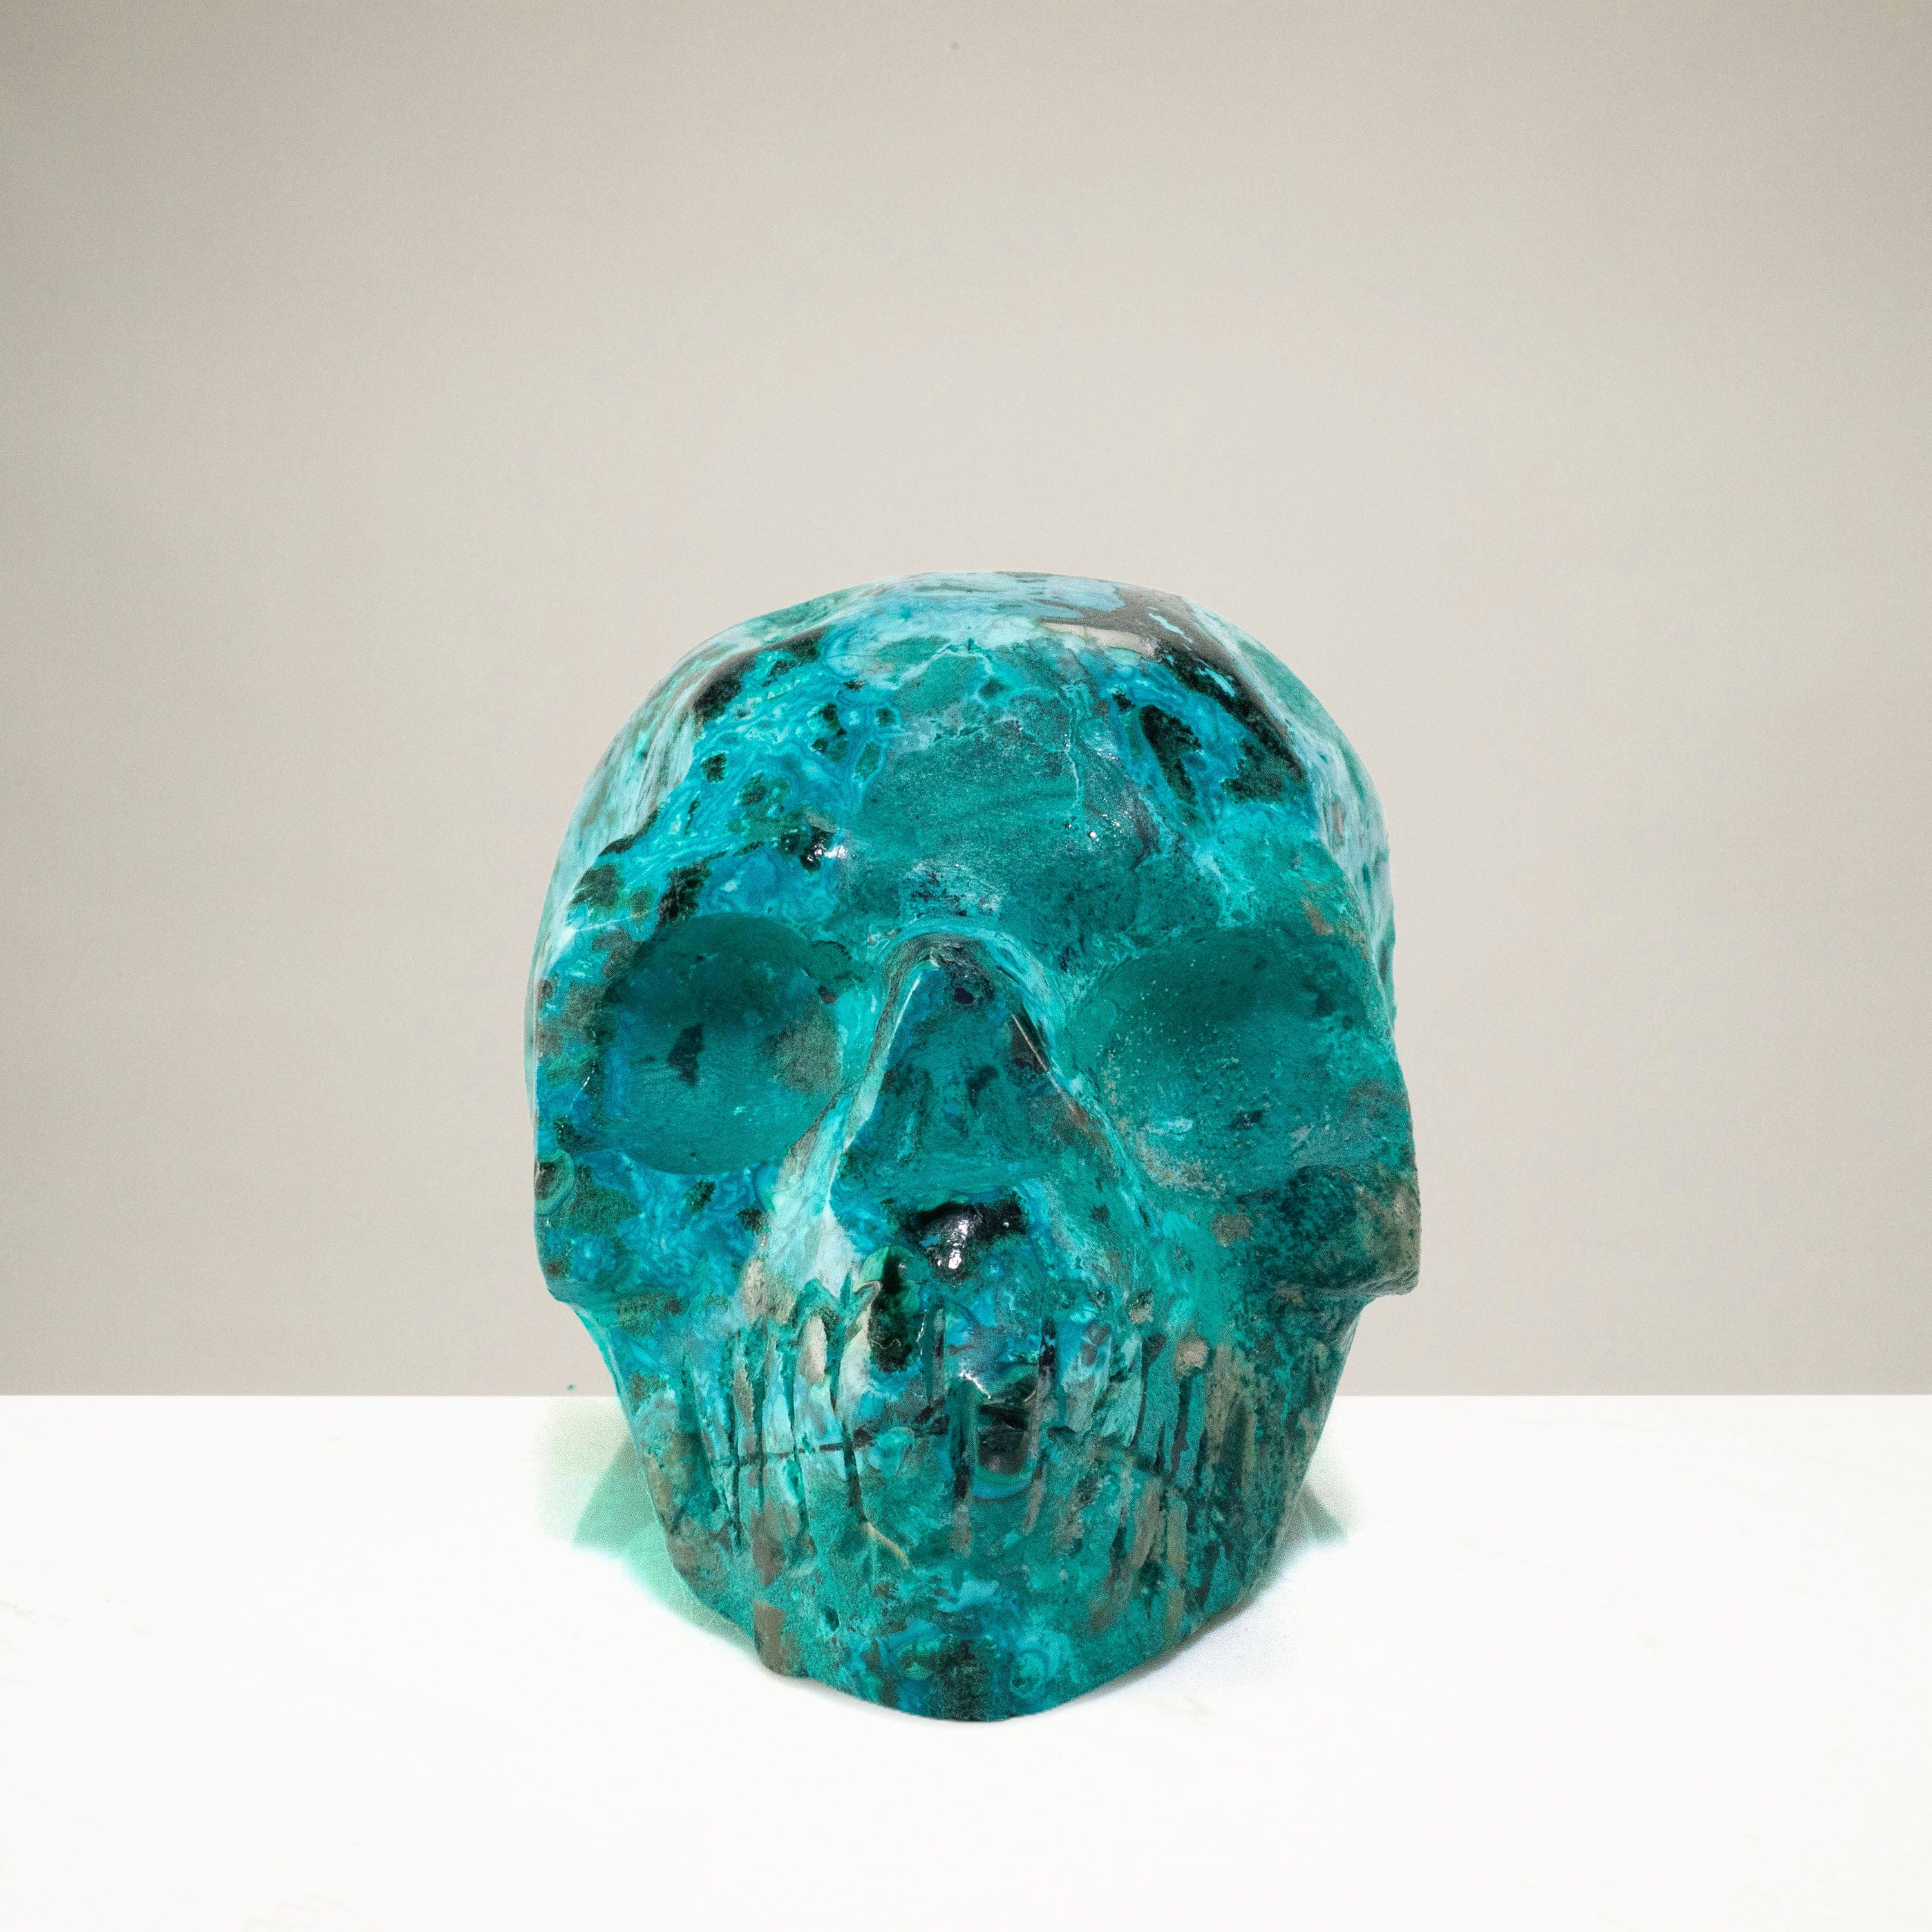 Kalifano Malachite Chrysocolla Skull Carving 3" / 143g SK600-CRY.001